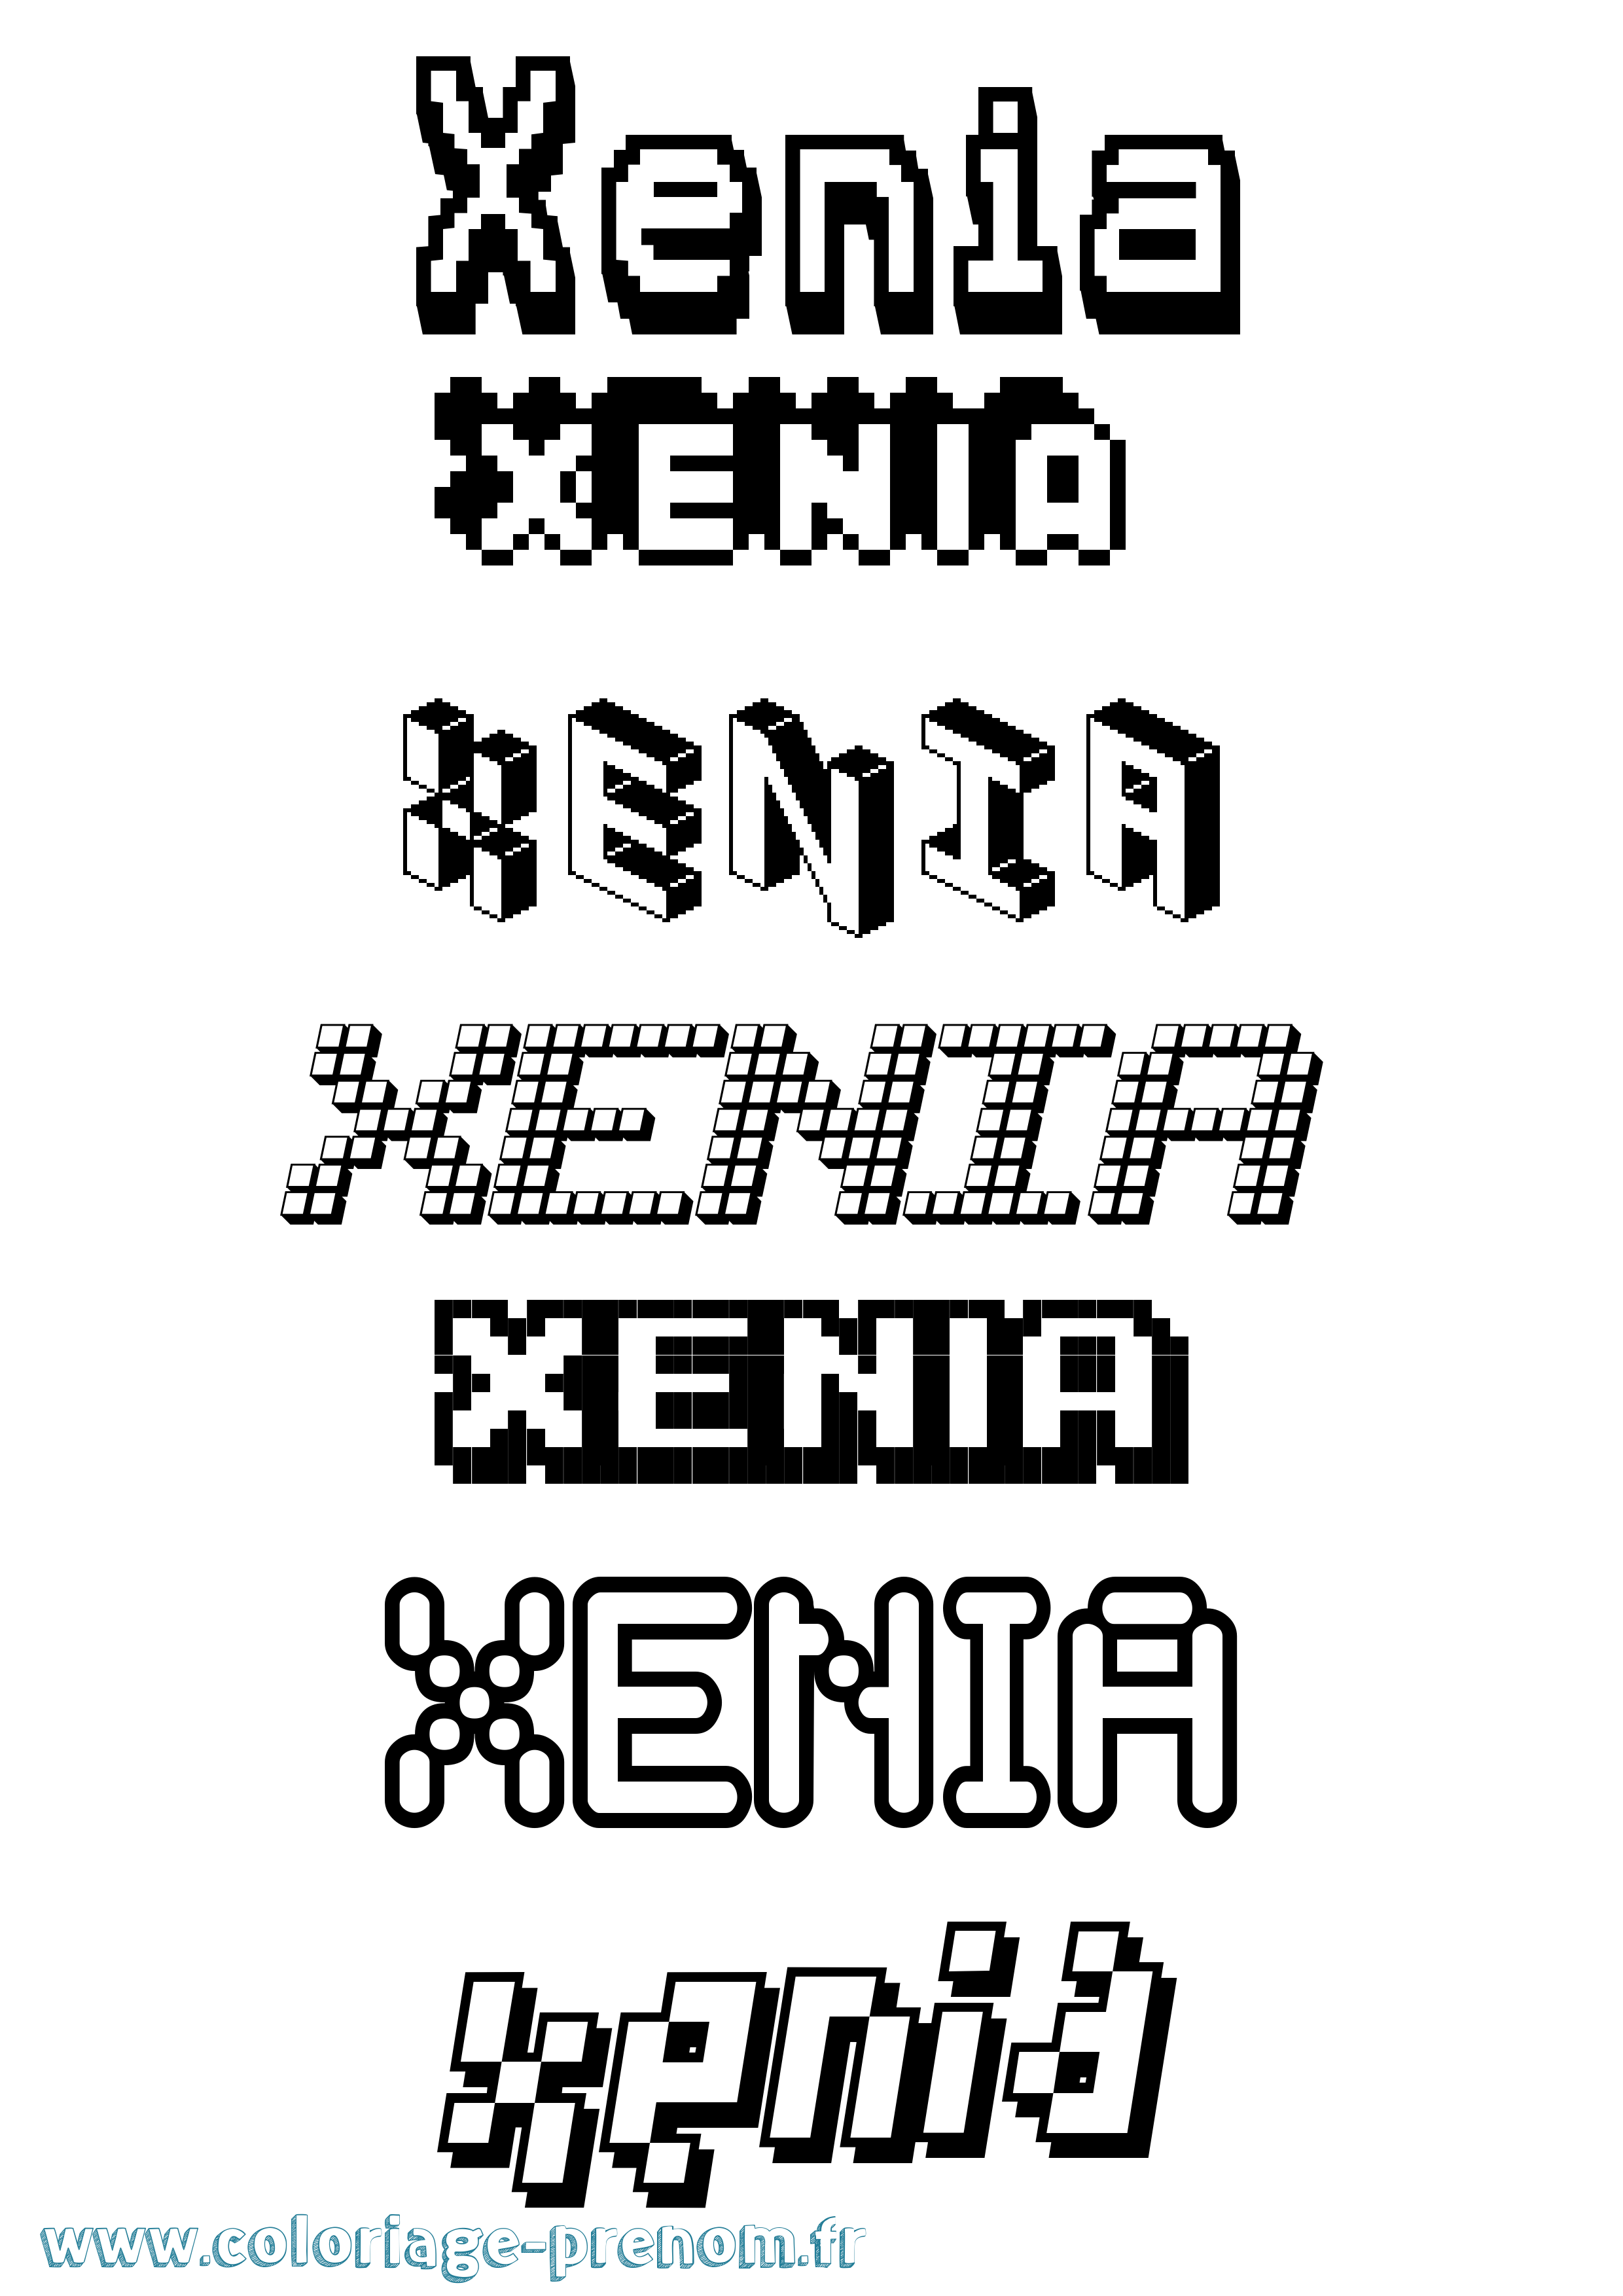 Coloriage prénom Xenia Pixel